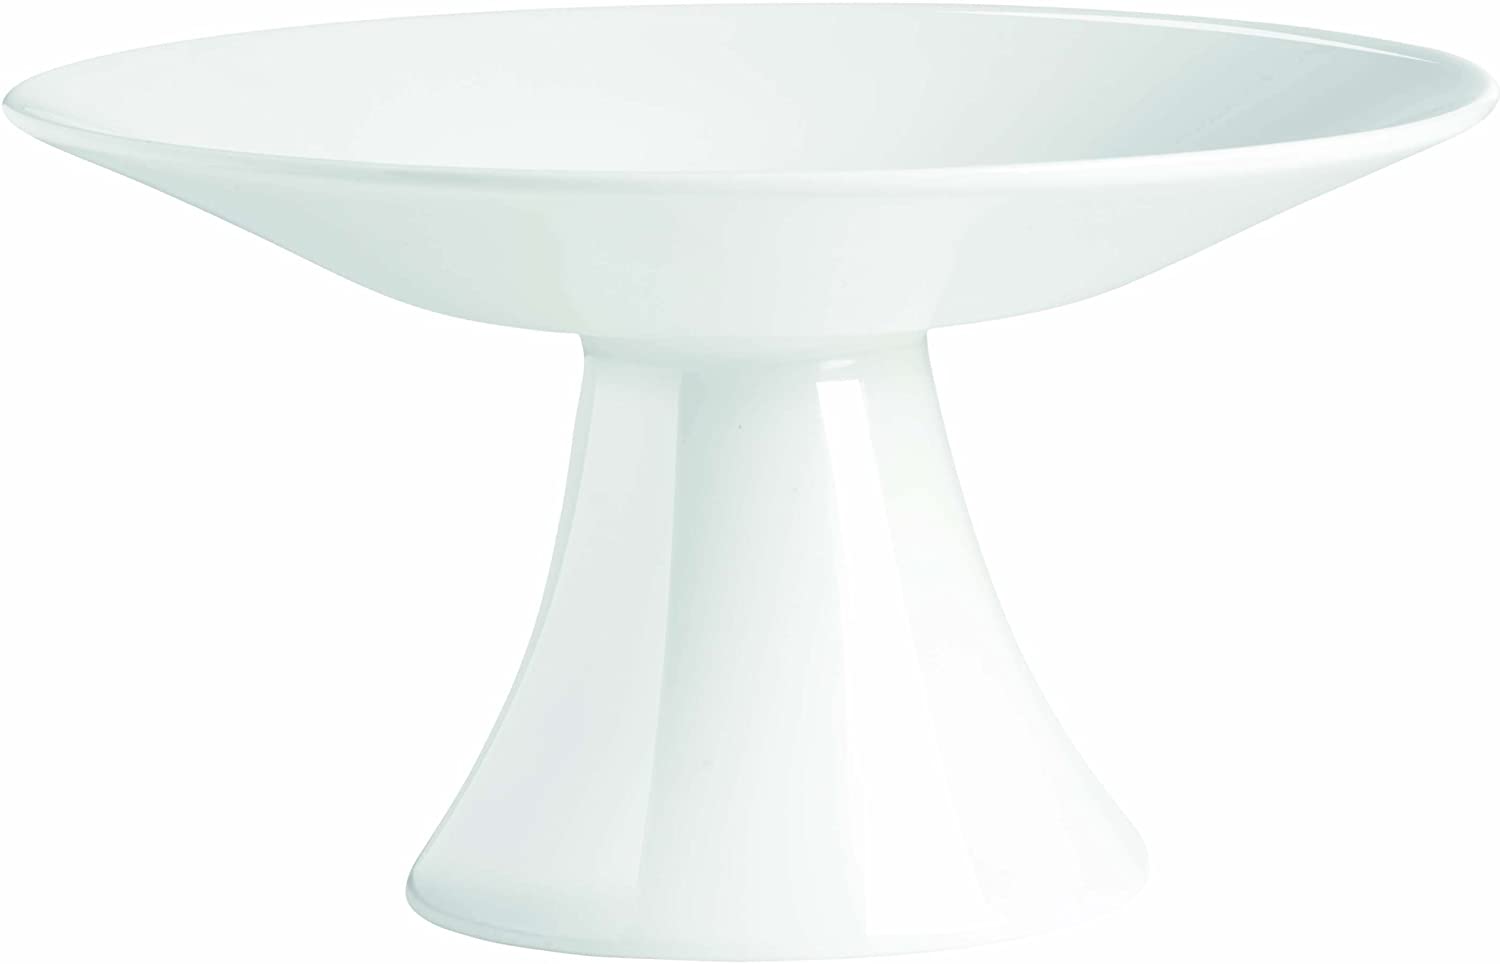 ASA 1960013 Measuring Table Bowl with Base Porcelain White 15 x 15 x 5 cm